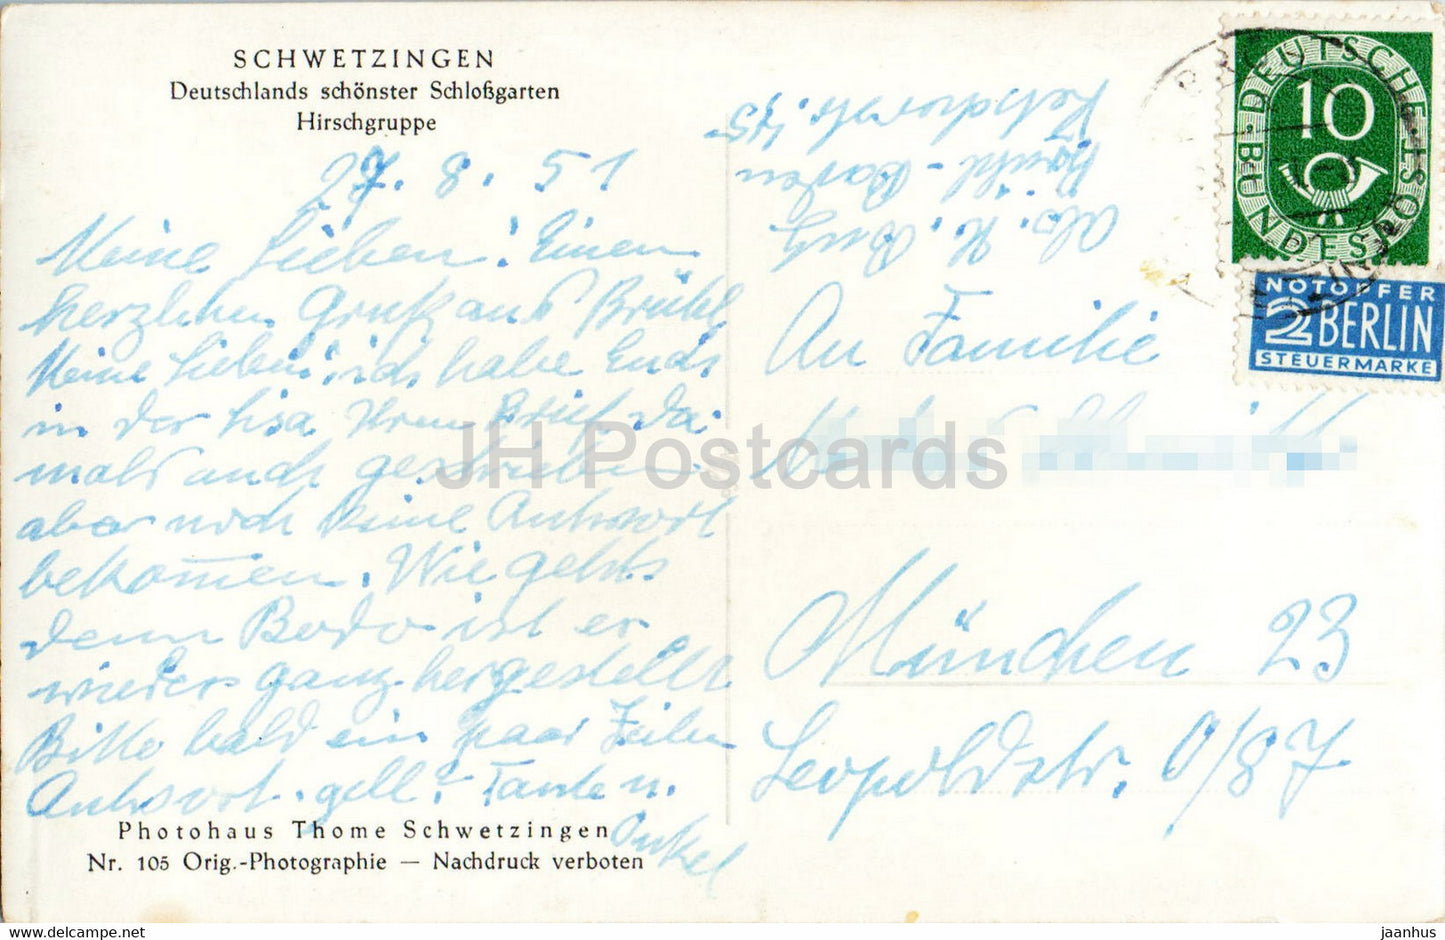 Schwetzingen - Deutschlands schonster Schlossgarten - Hirschgruppe - carte postale ancienne - 1951 - Allemagne - utilisé